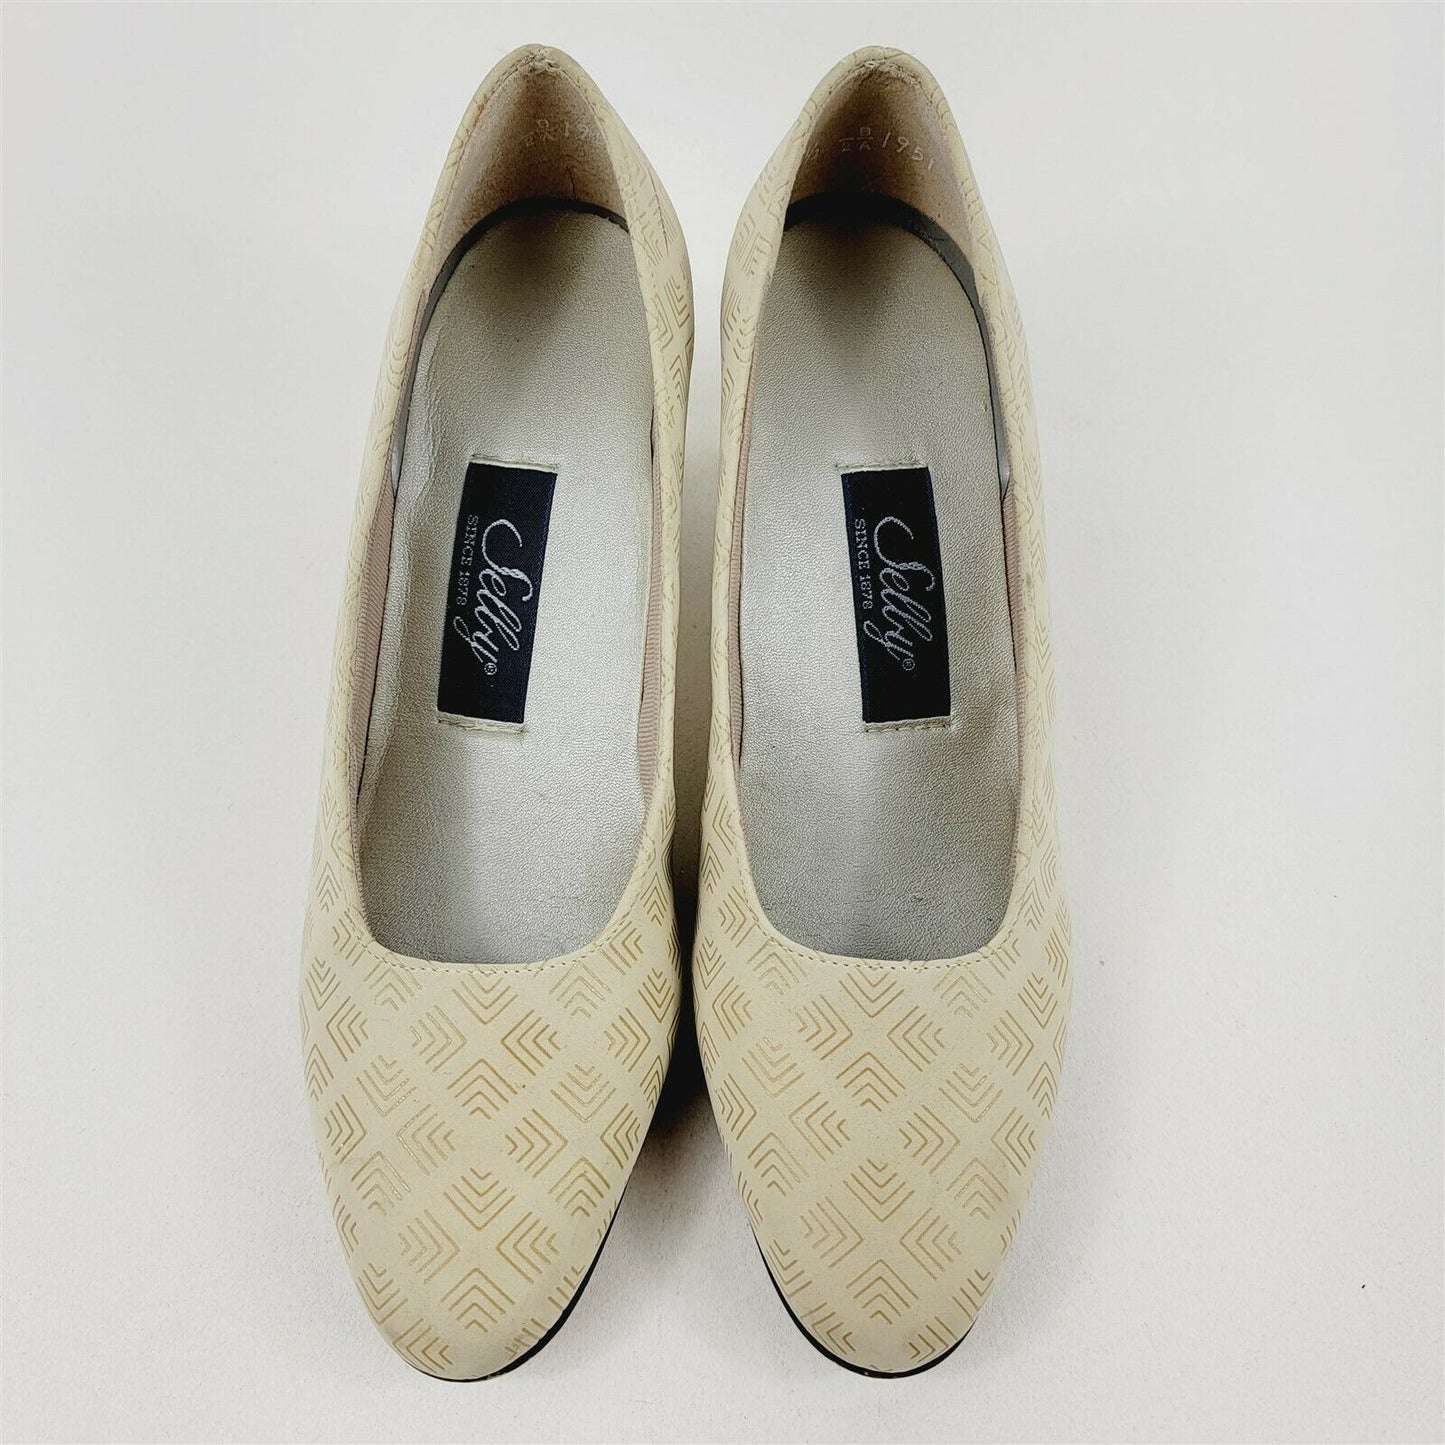 Selby Vintage Block Heel Shoes Cream Geometric Womens Size 5.5